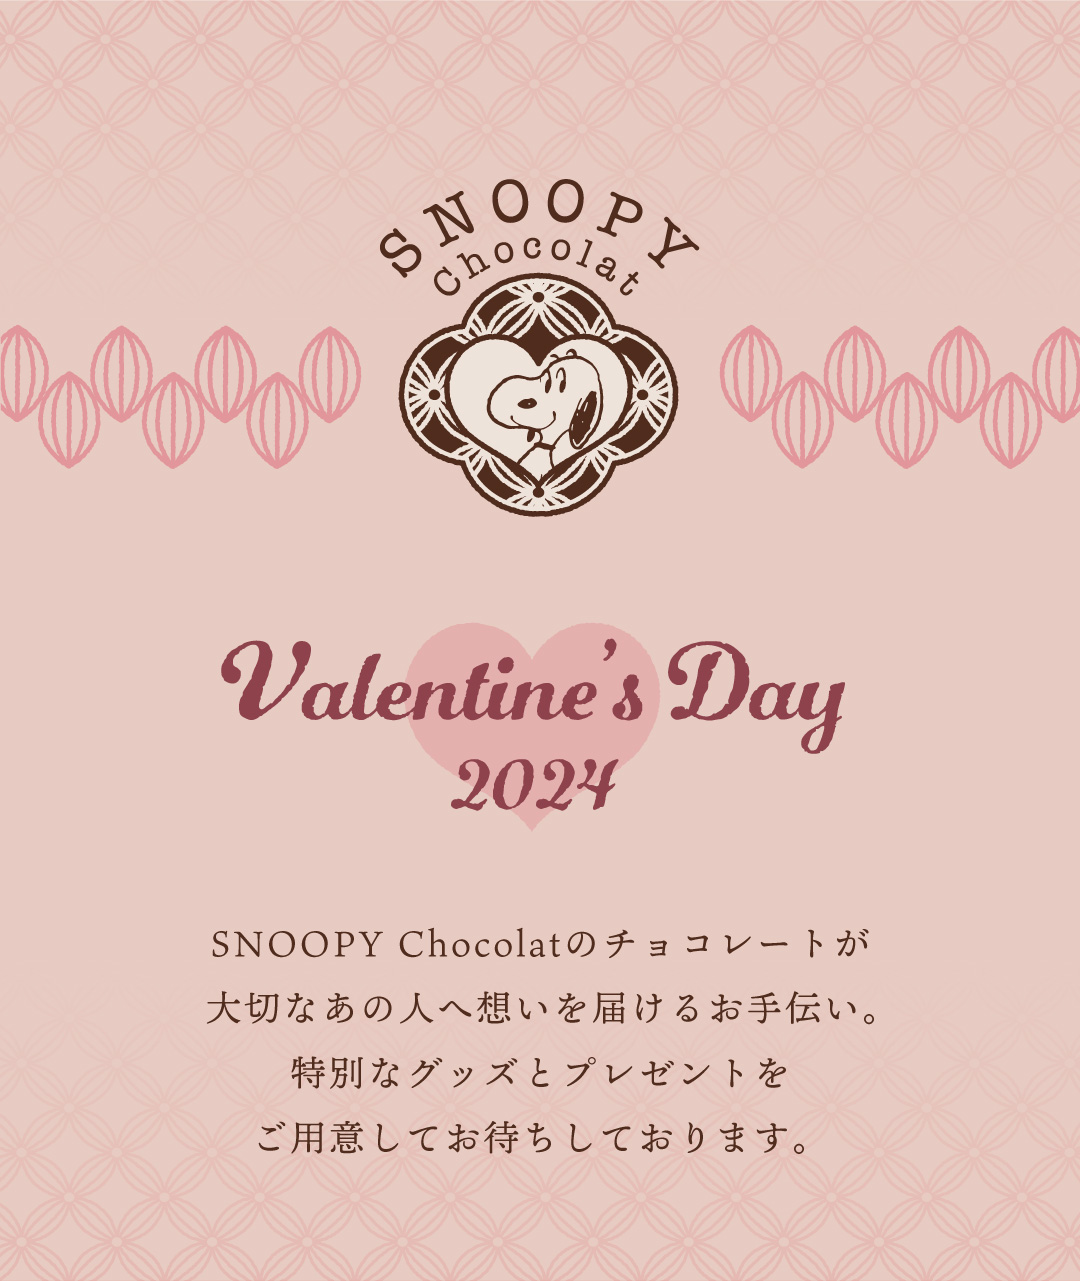 SNOOPY Chocolat Valentine'sDay